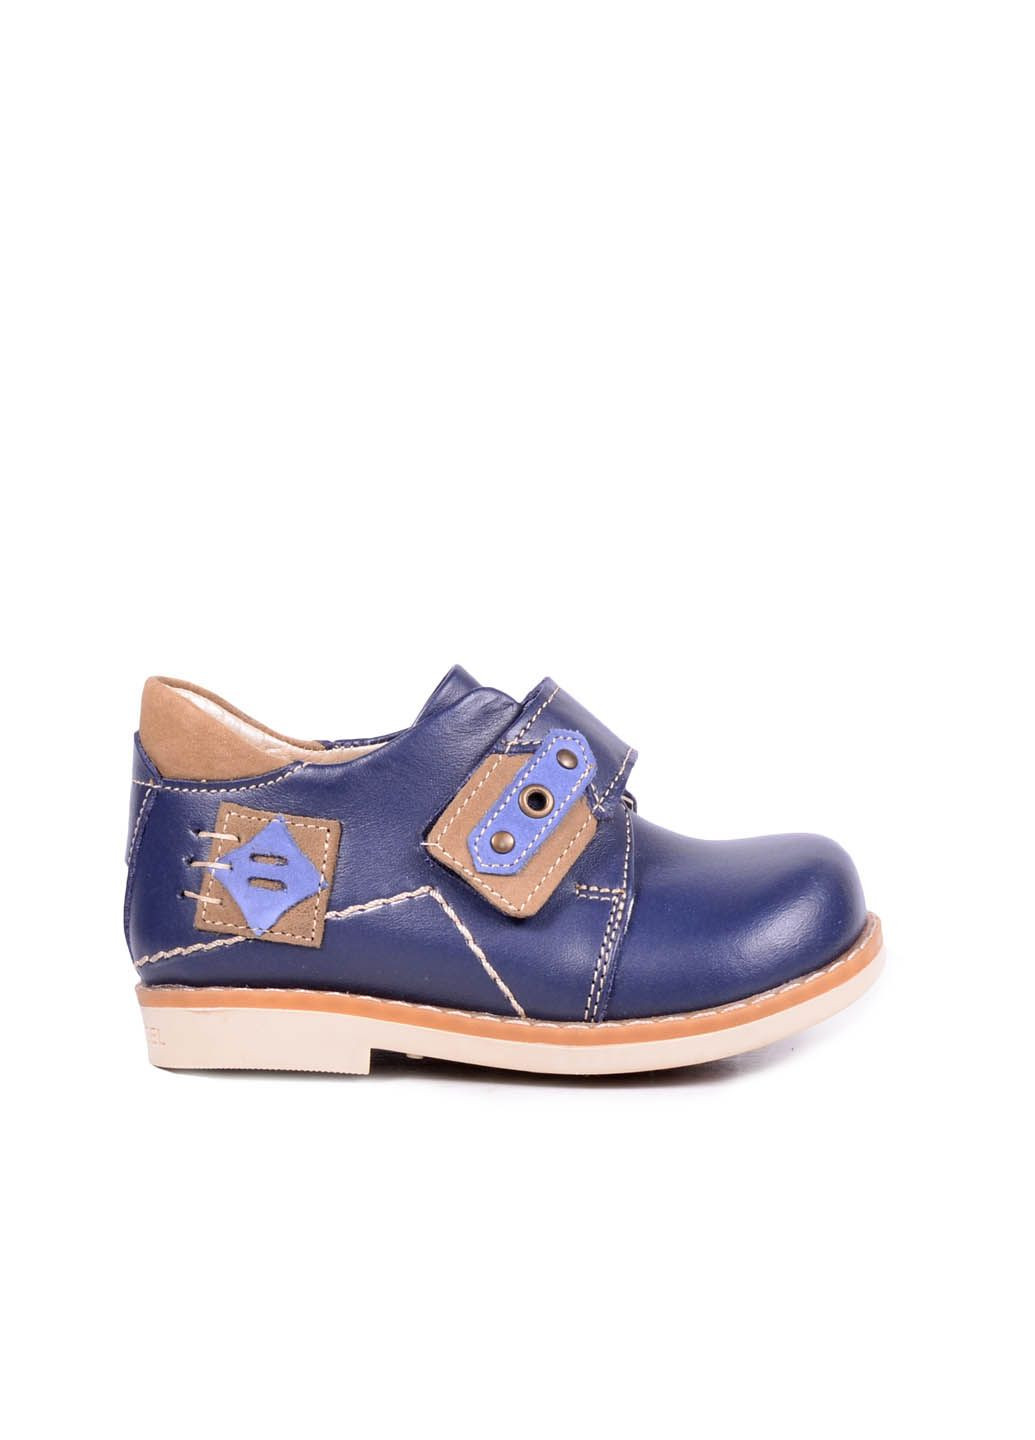 Орто туфлі для хлопчика Irbis 243_blue (280929177)